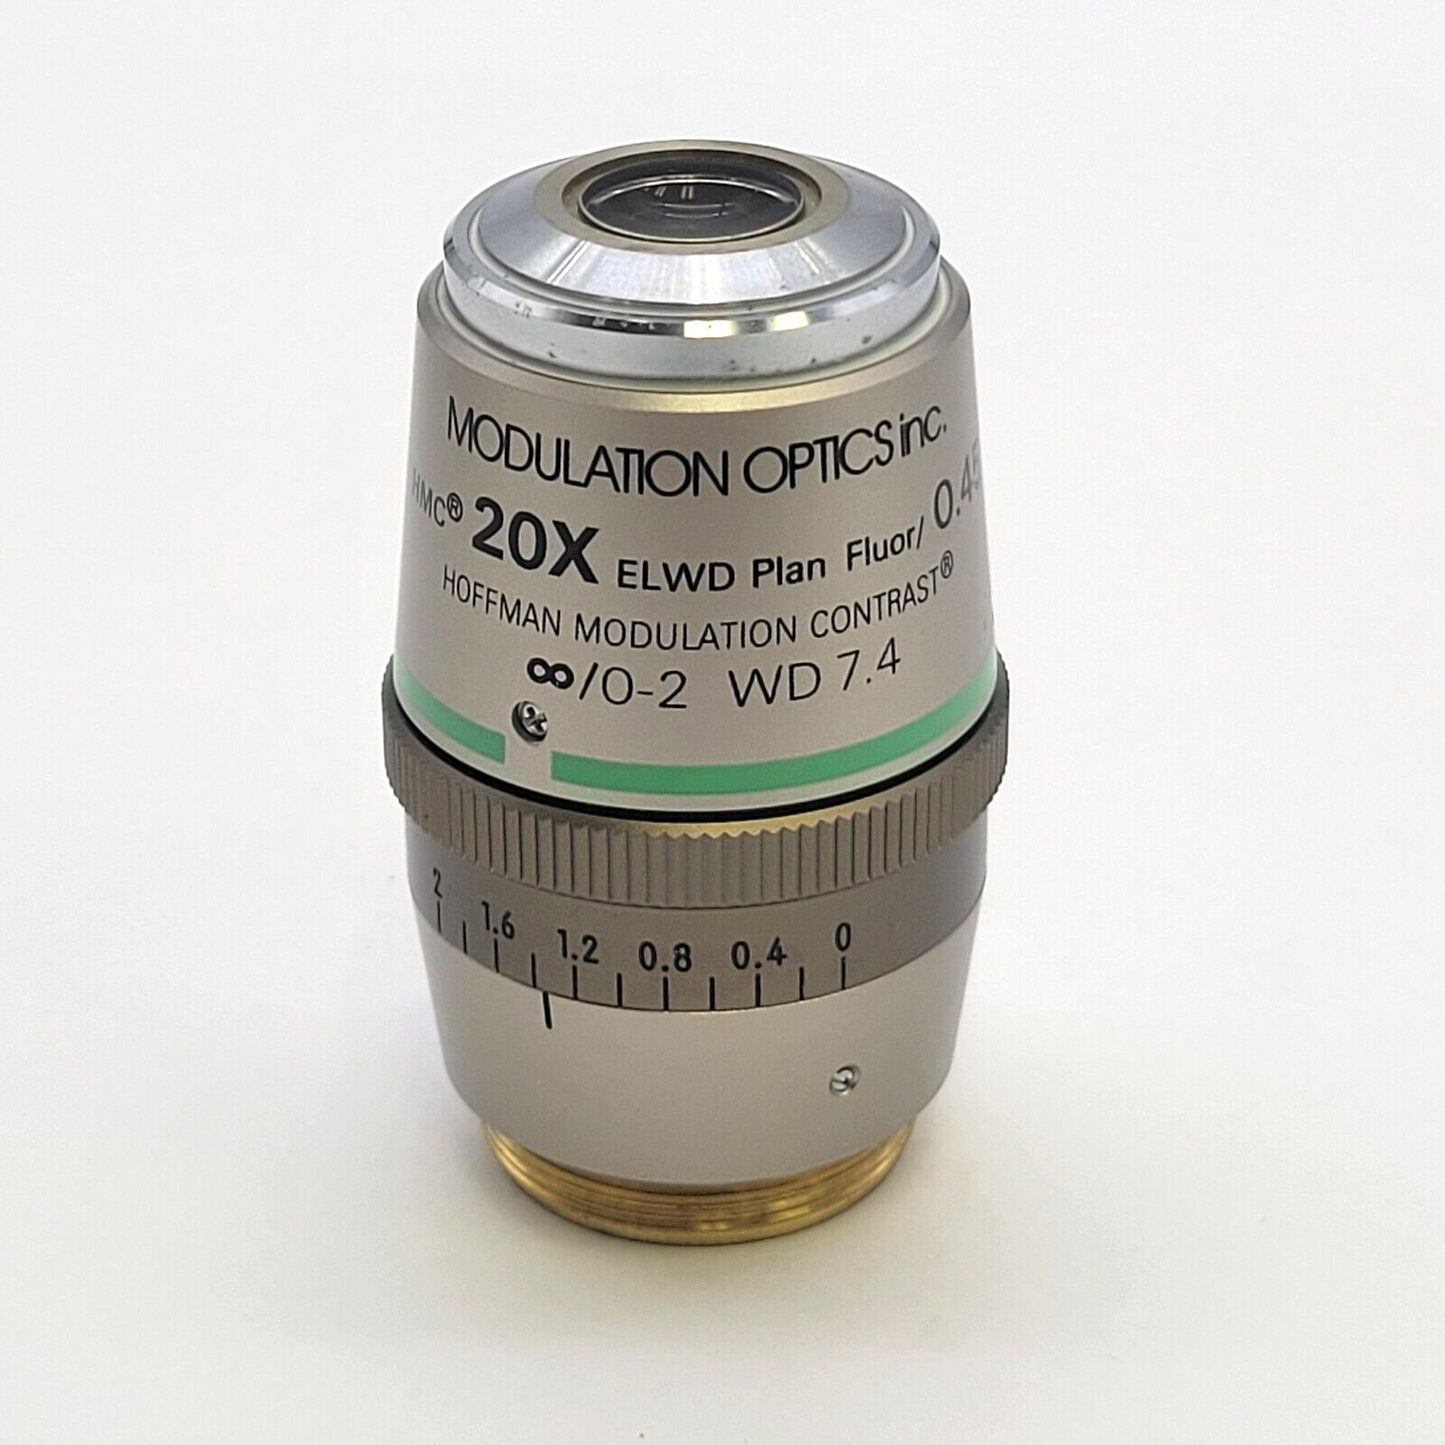 Nikon Microscope Objective Hoffman Modulation Contrast 20x ELWD Plan Fluor - microscopemarketplace